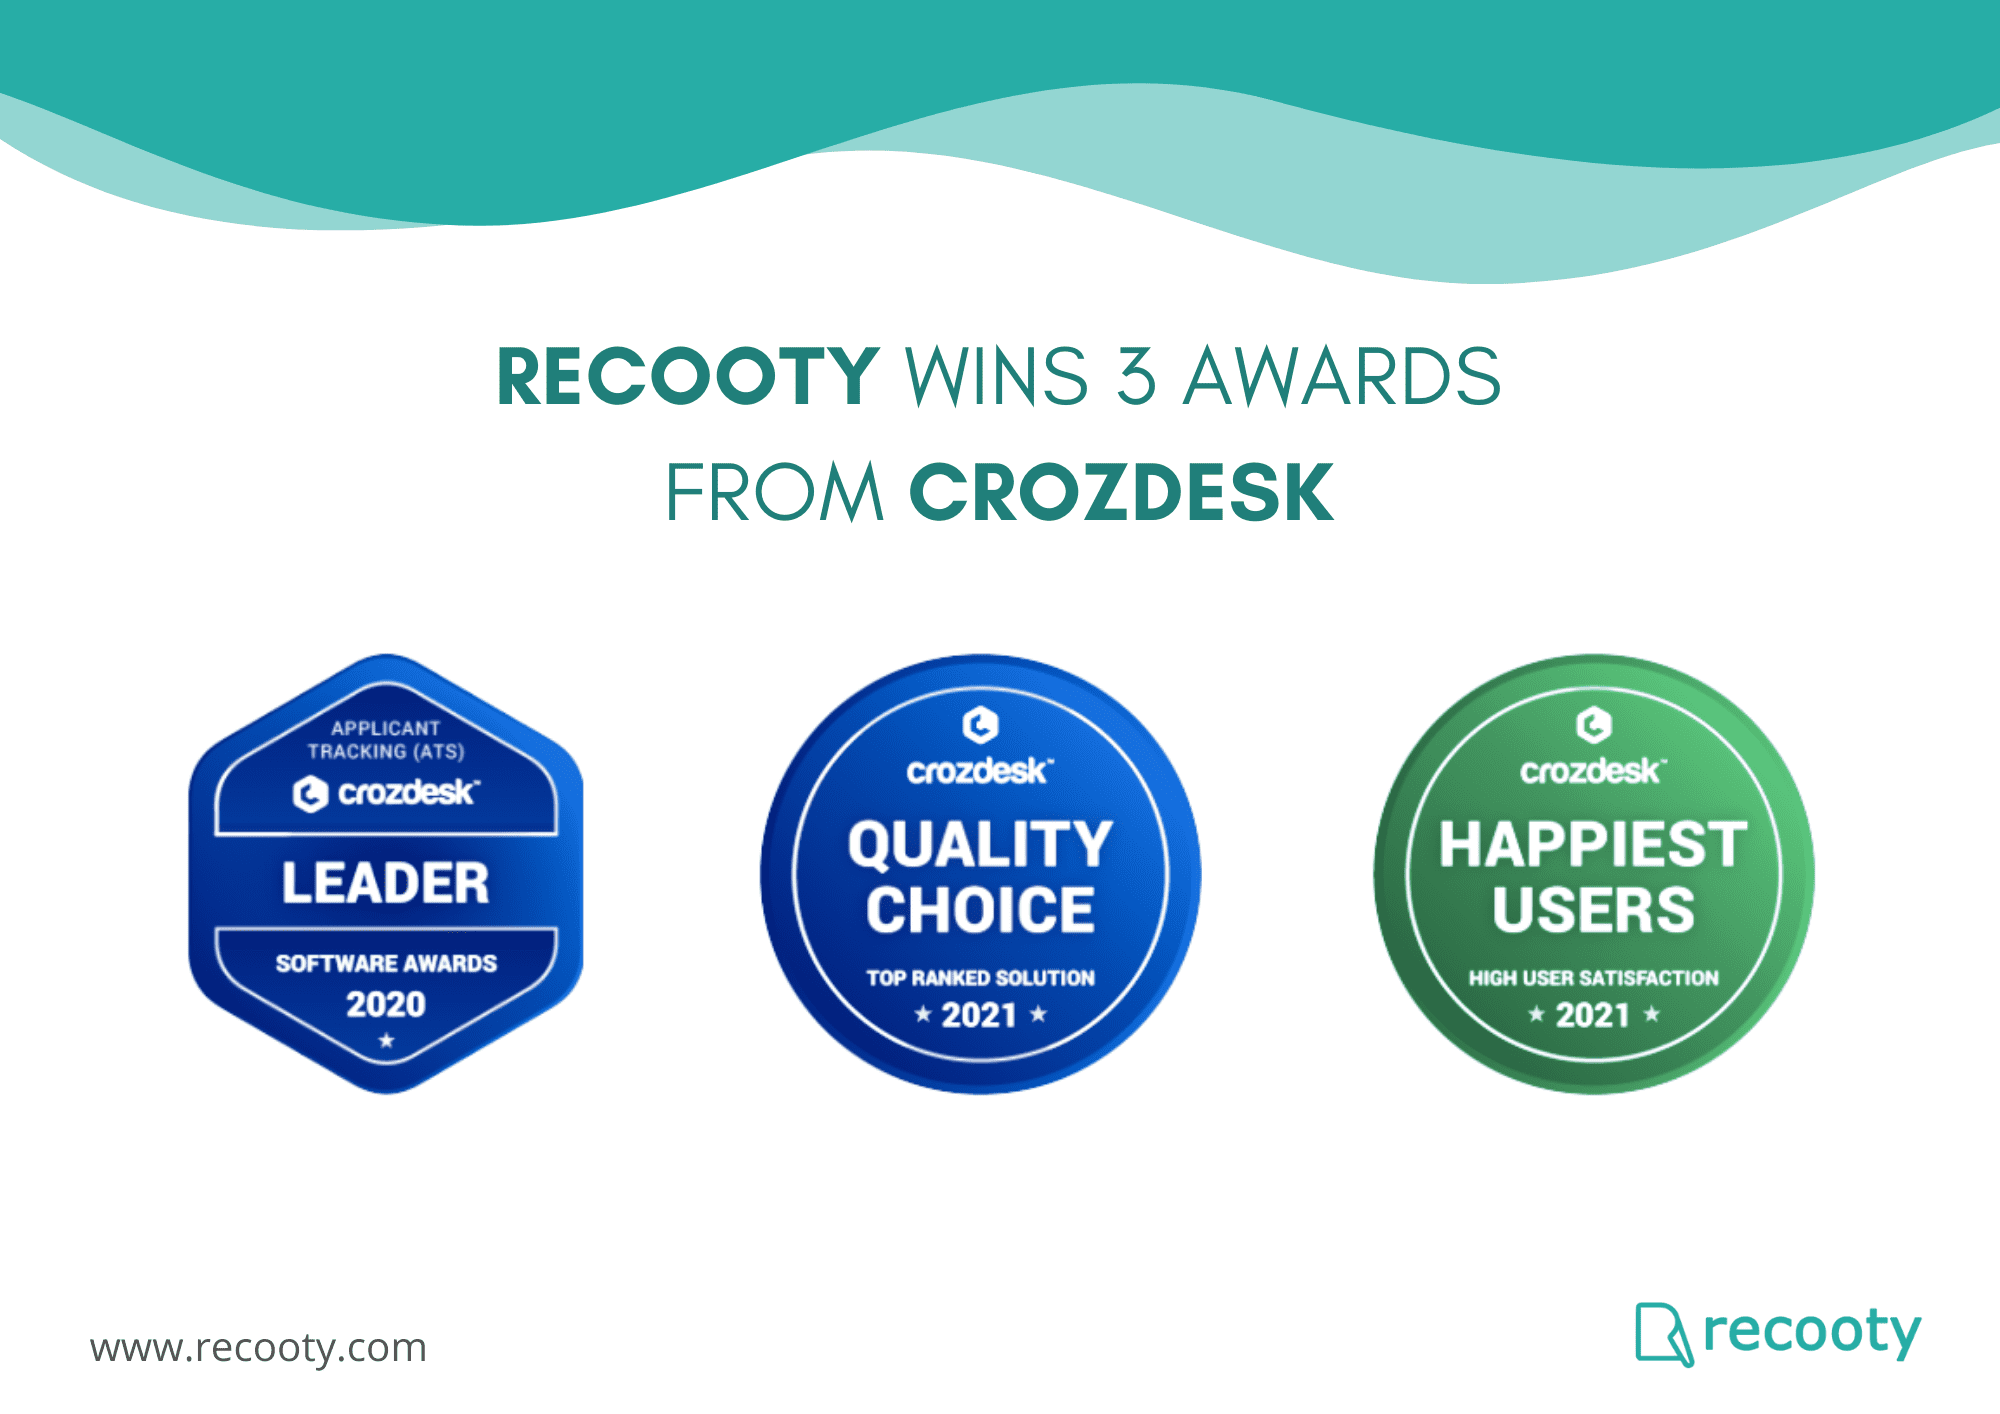 Corzdesk awards recooty. Crozdesk recognition awards 2020. Crozdesk recognition awards 2021. Recooty receives awards from Crozdesk.